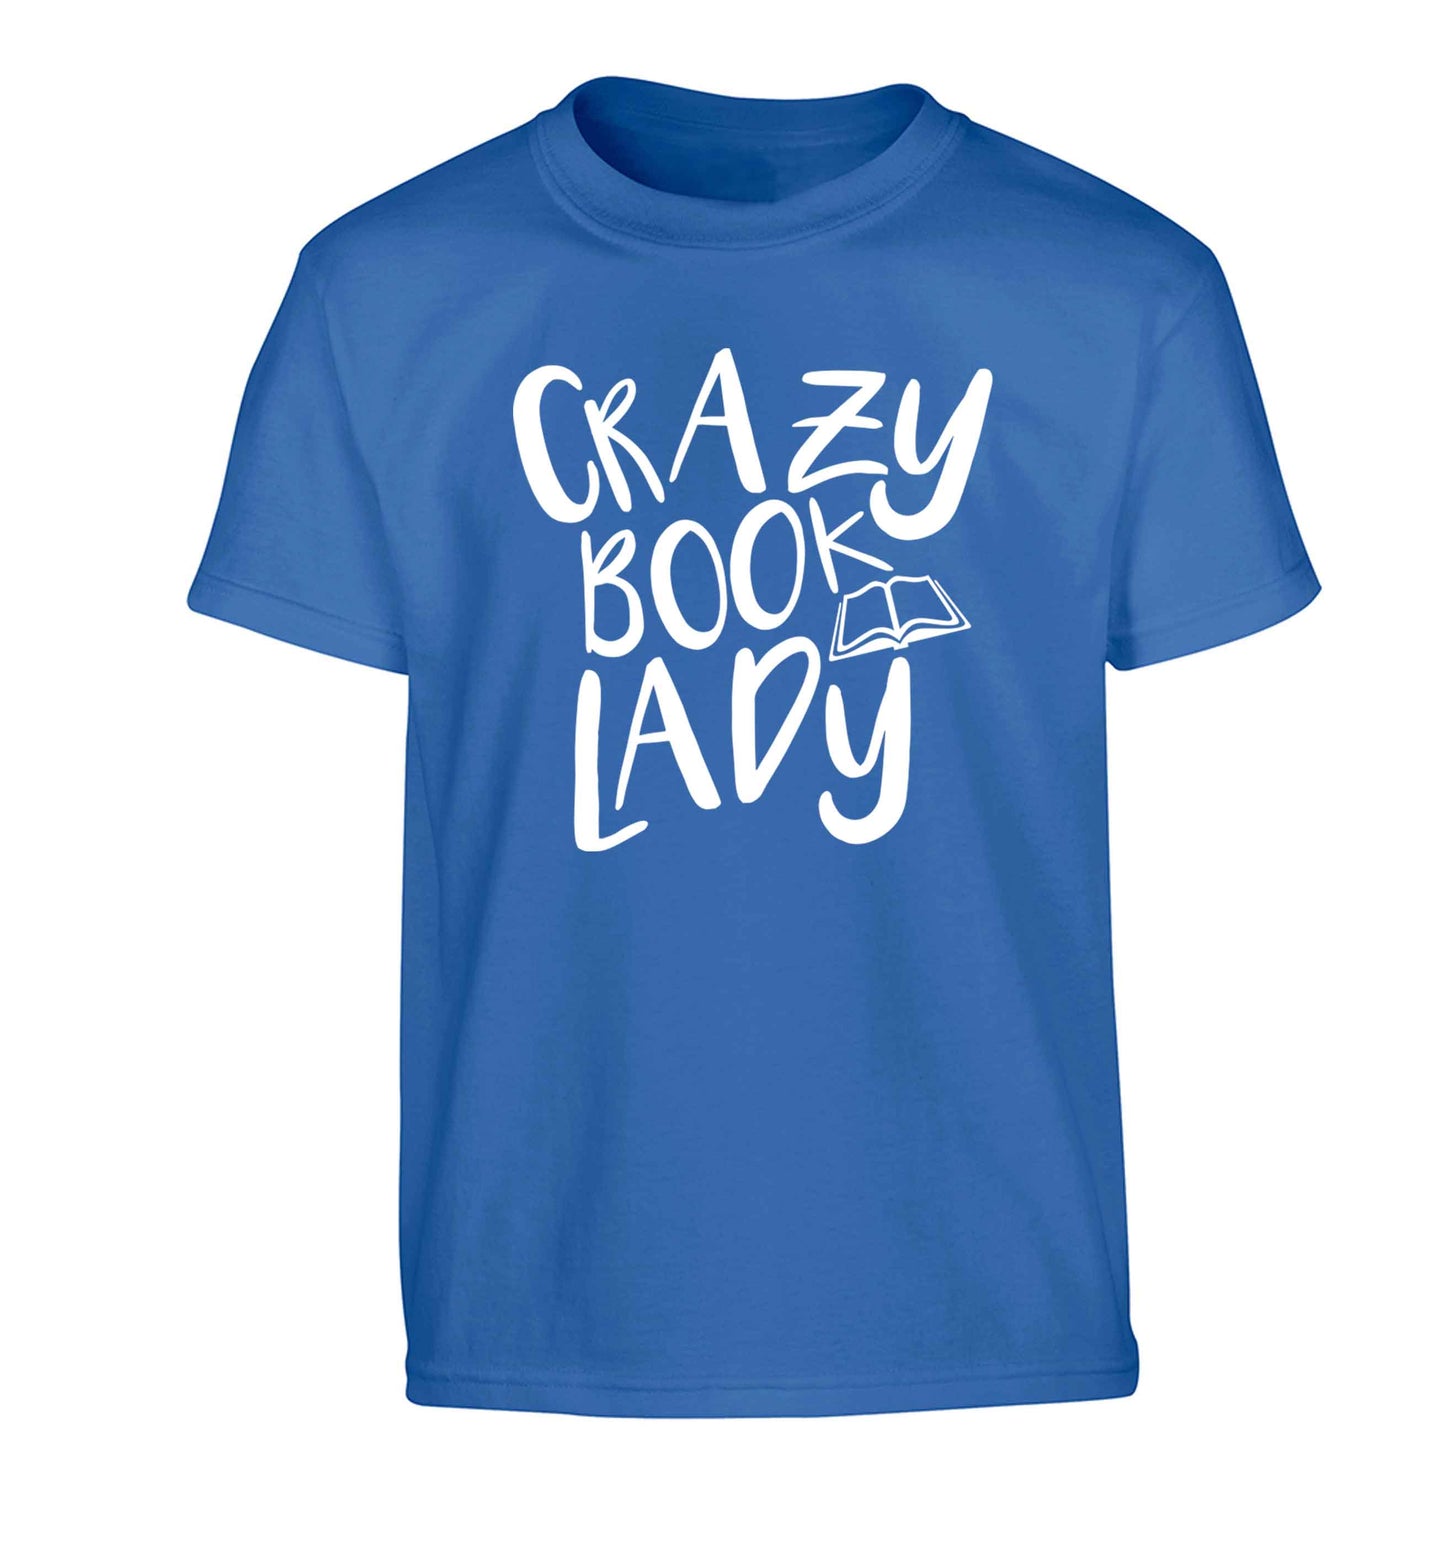 Crazy book lady Children's blue Tshirt 12-13 Years